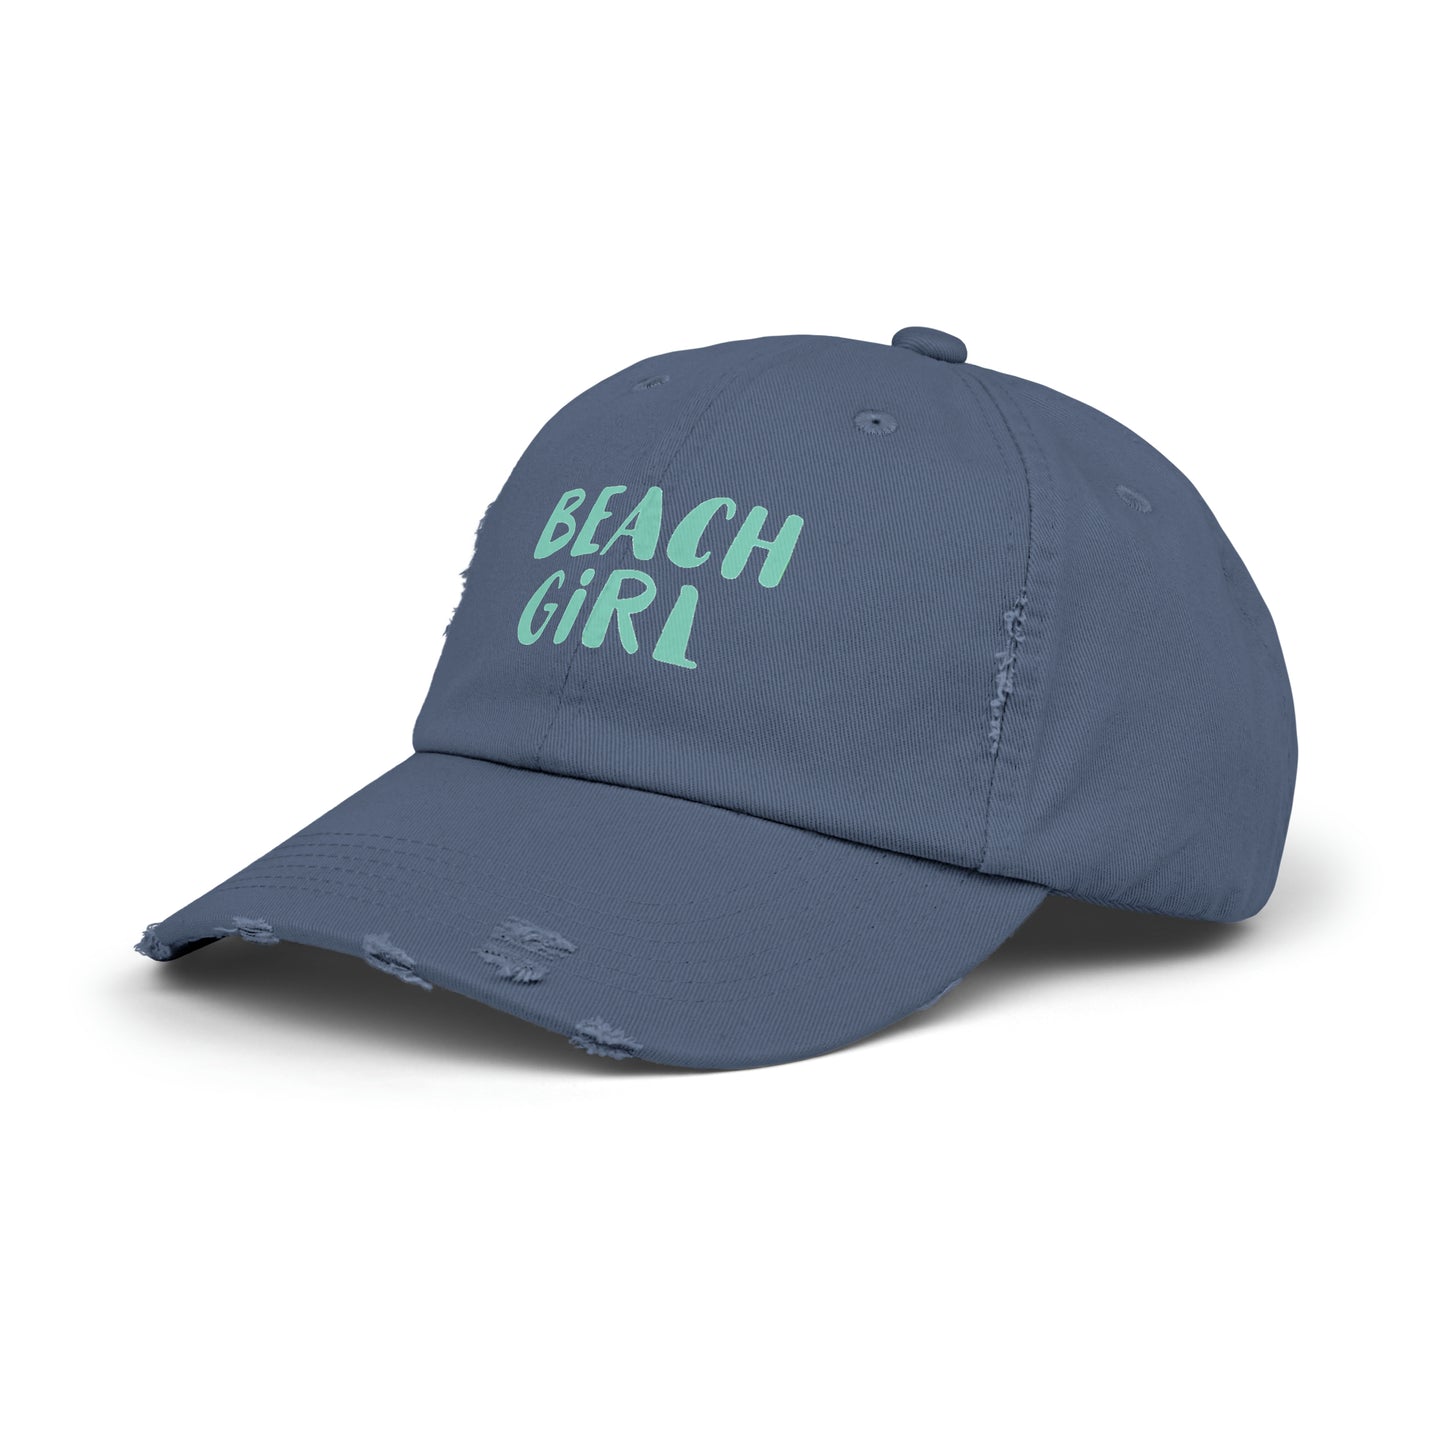 Beach girl Unisex Trucker Hat